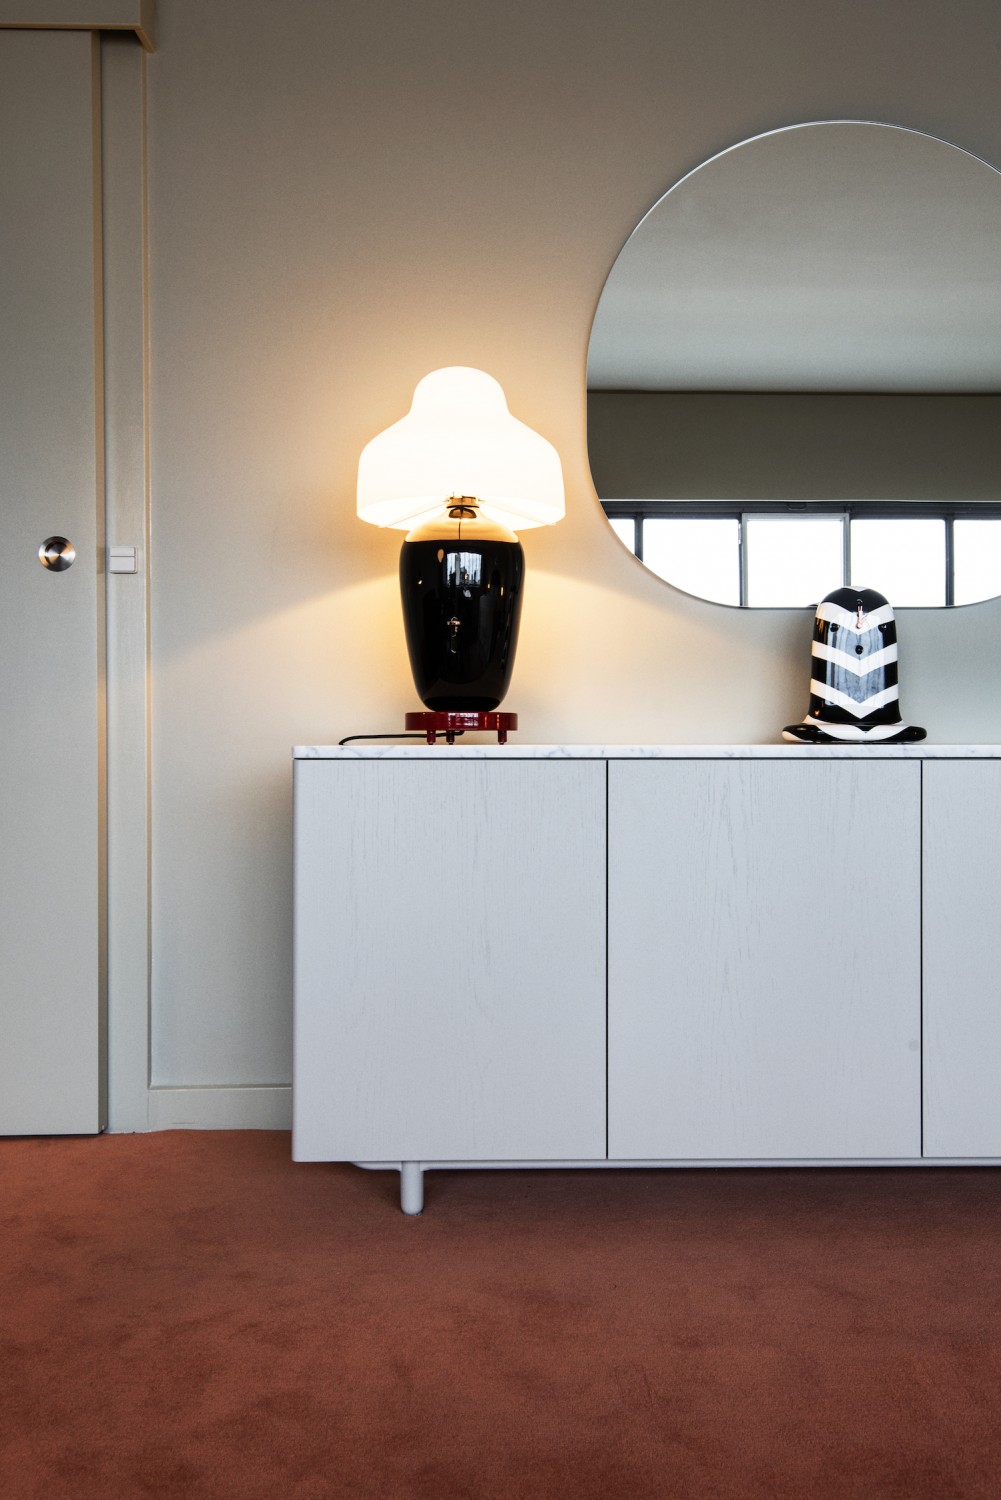 Room 506 by Jaime Hayon, SAS Royal Hotel in Copenhagen | Flodeau.com